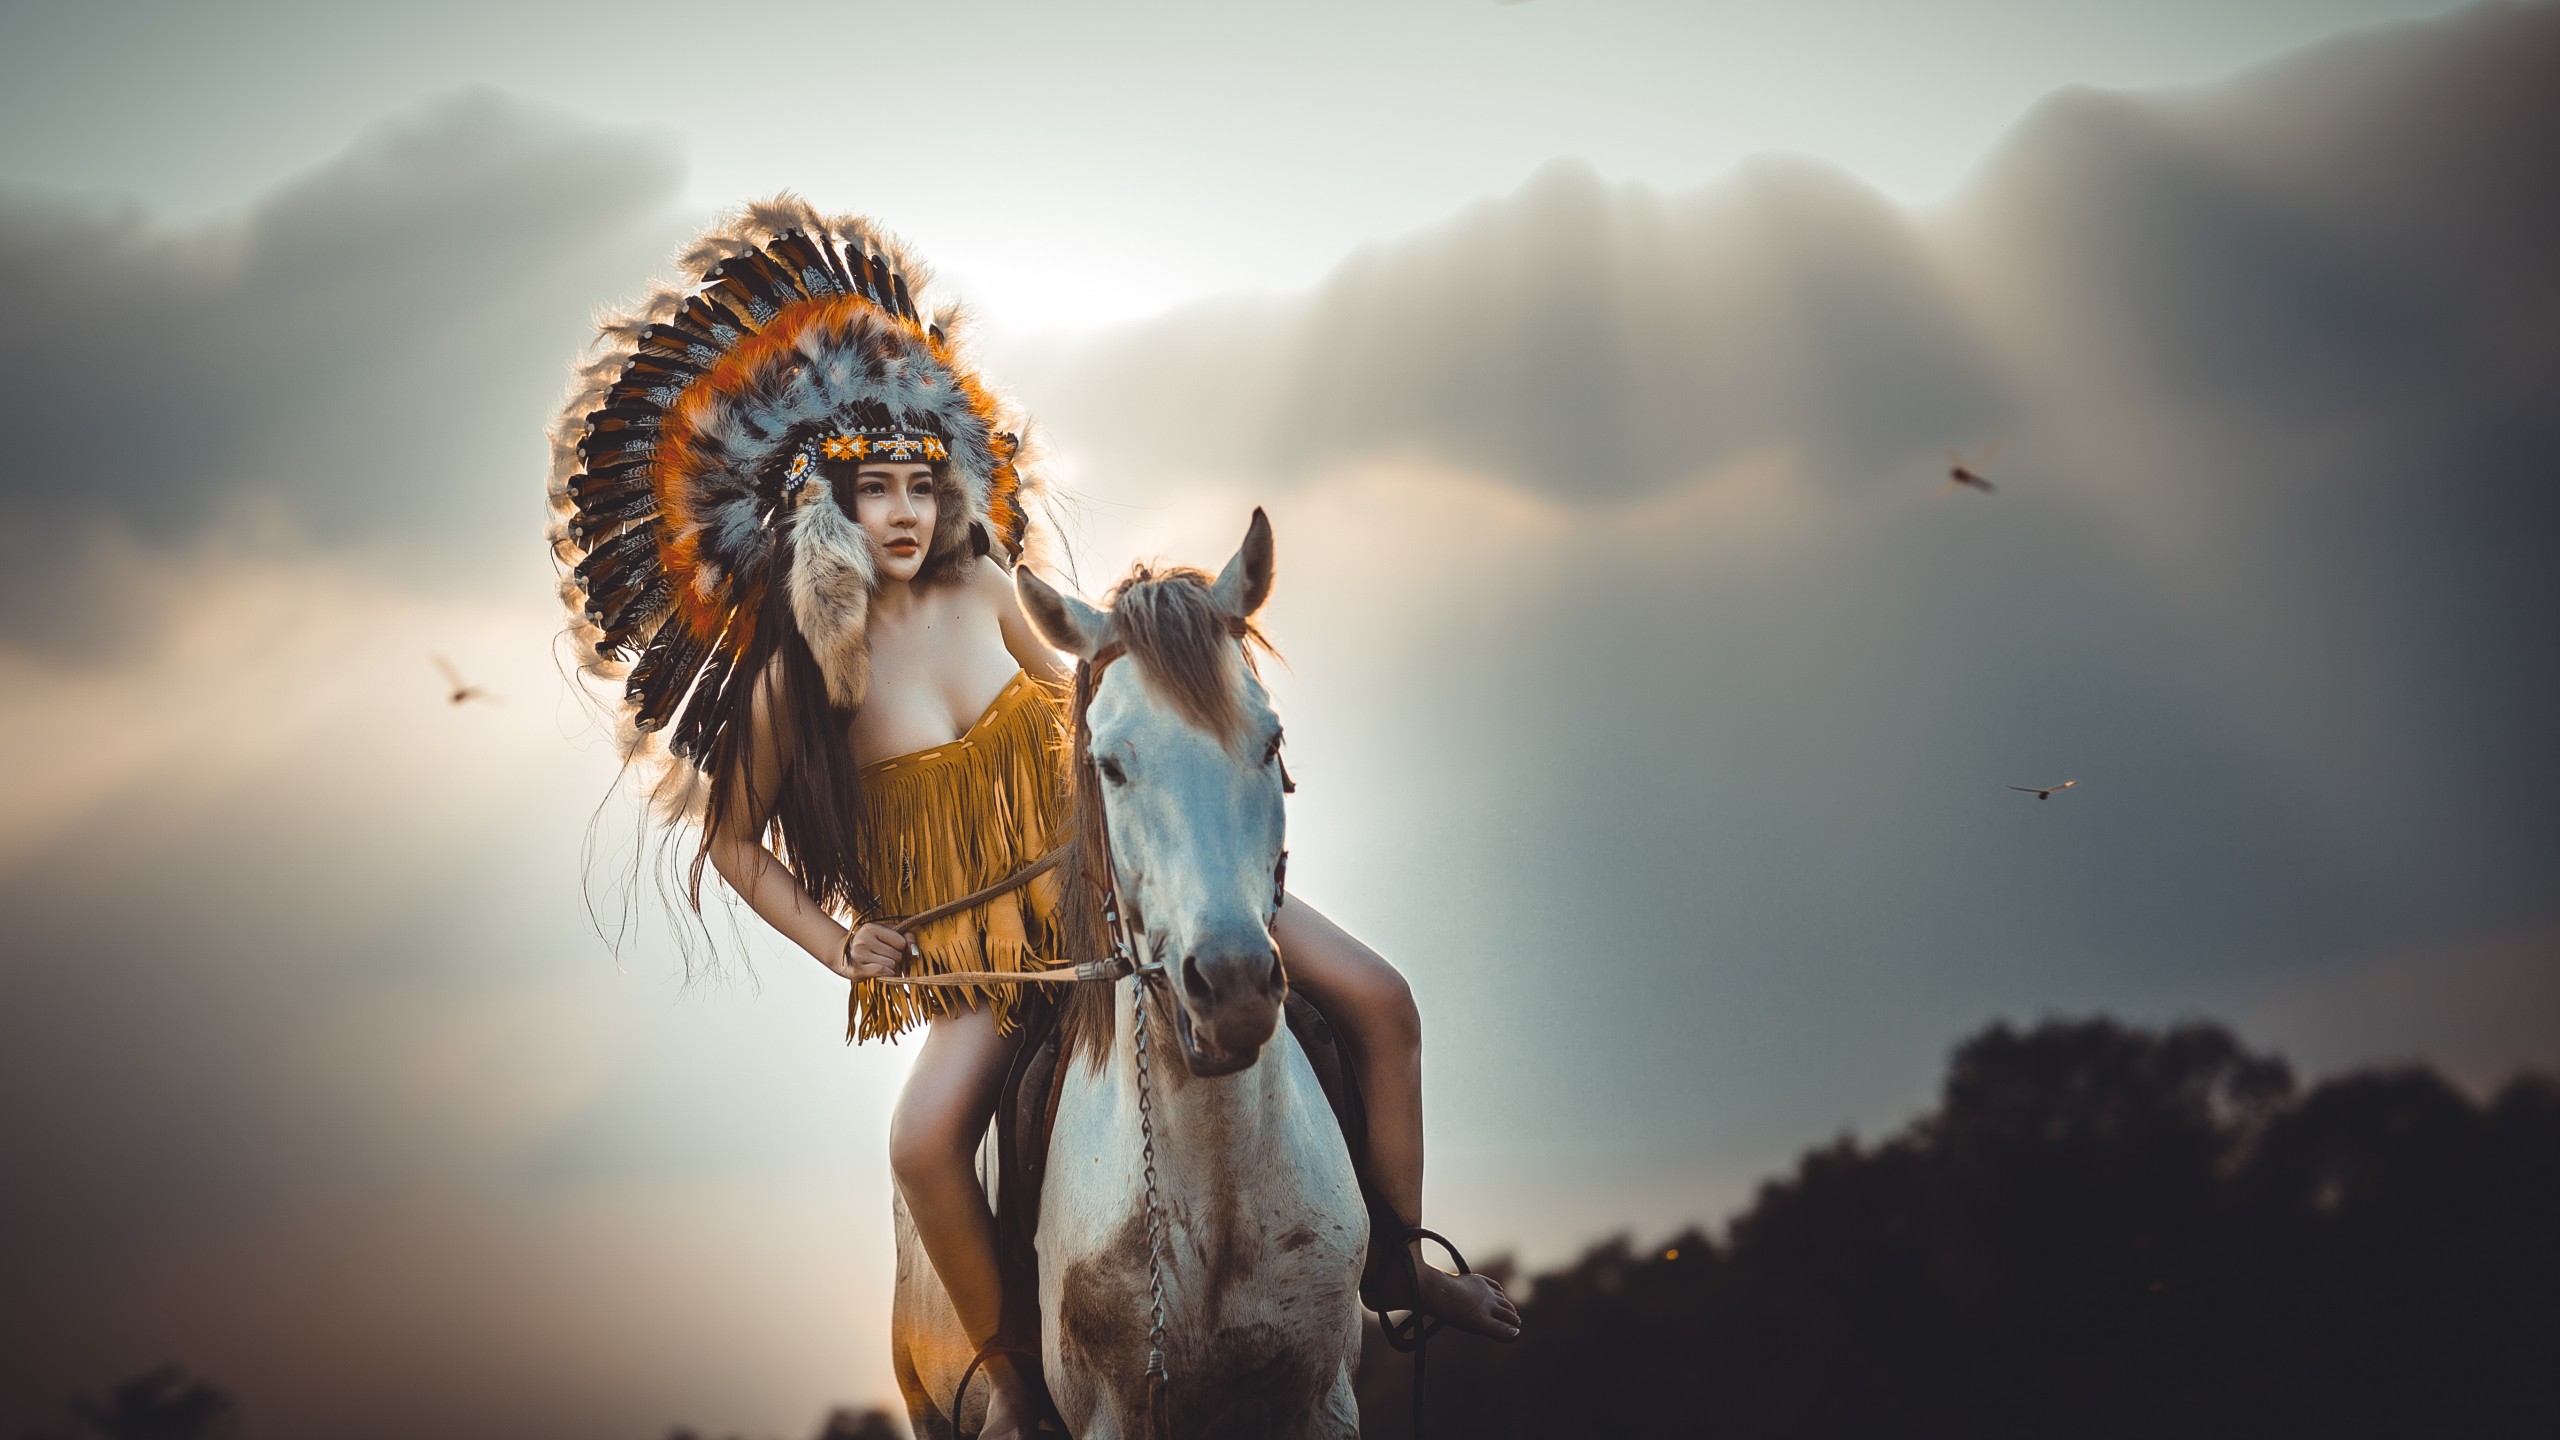 native american hd wallpaper,sky,mythology,photography,fun,cg artwork